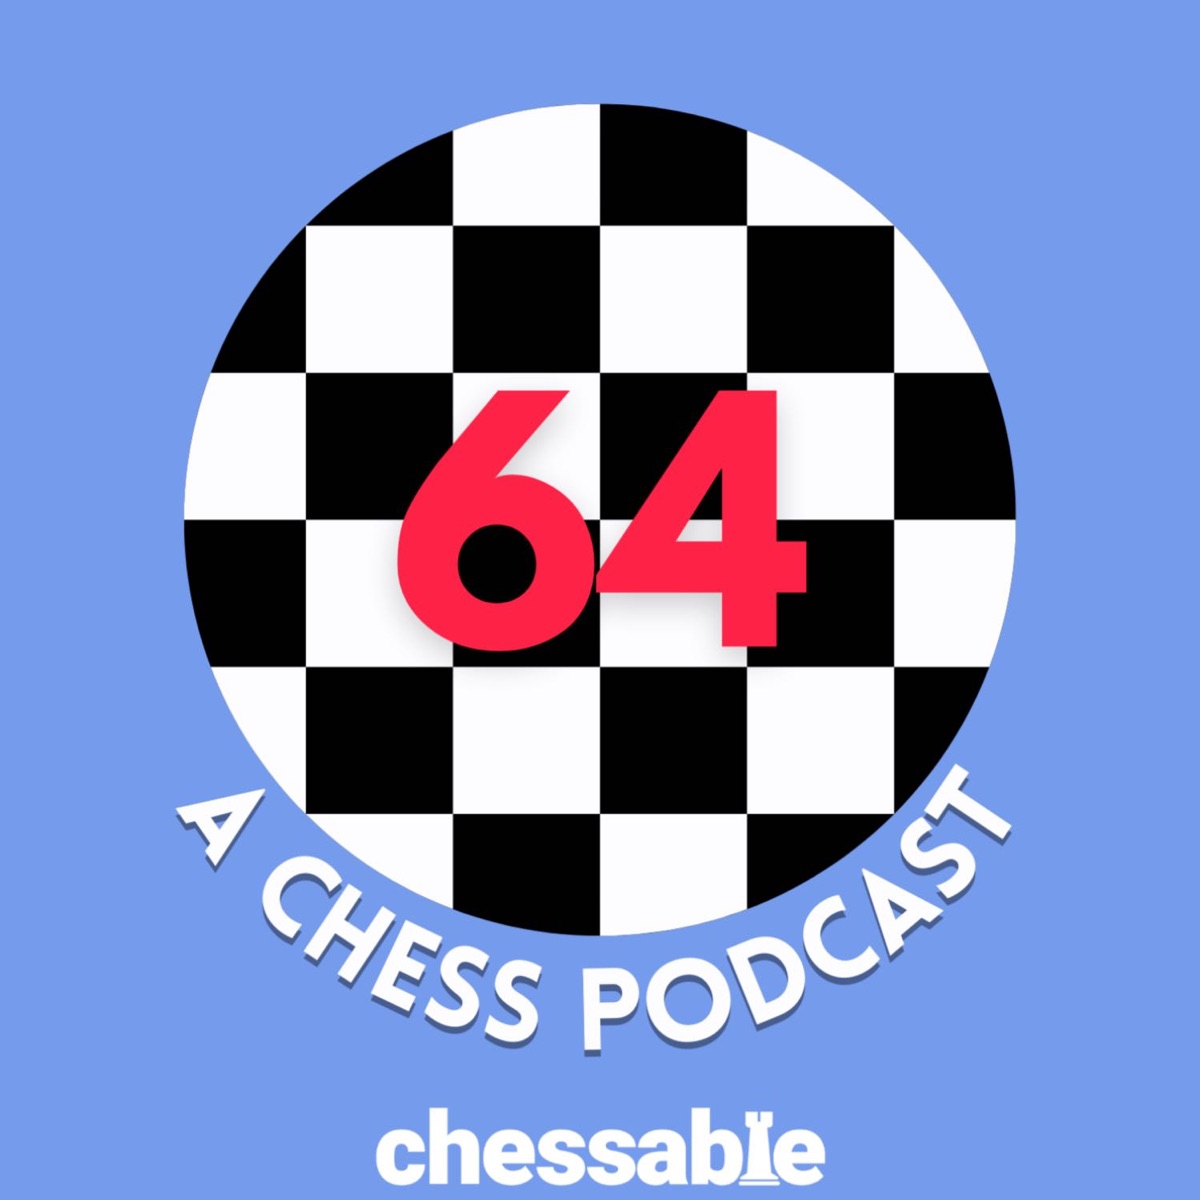 Podcast – CHESSBOXING NATION